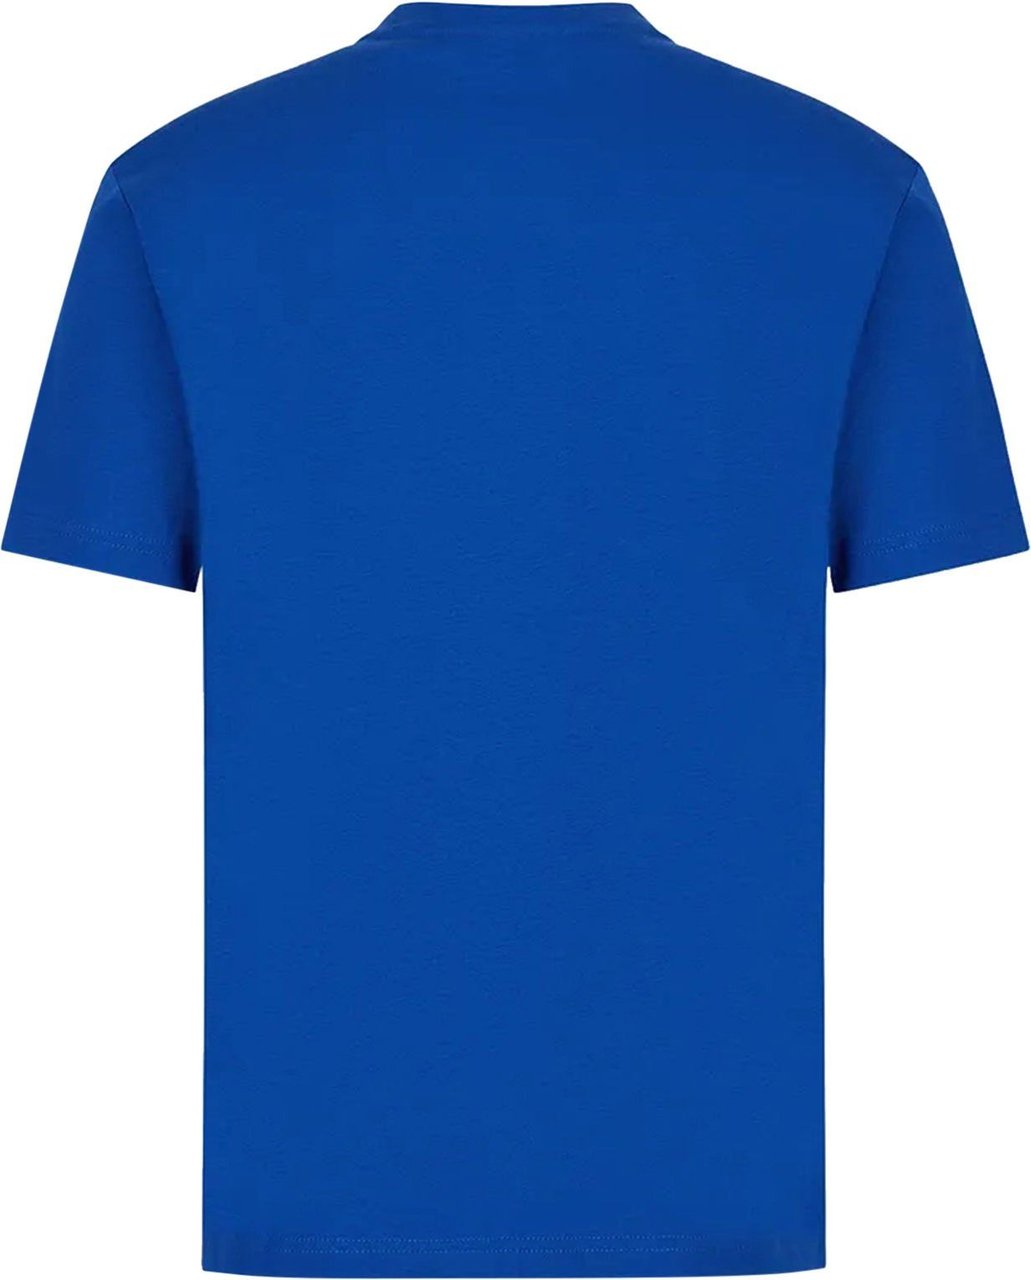 EA7 T-Shirt New Royal Blue Blauw